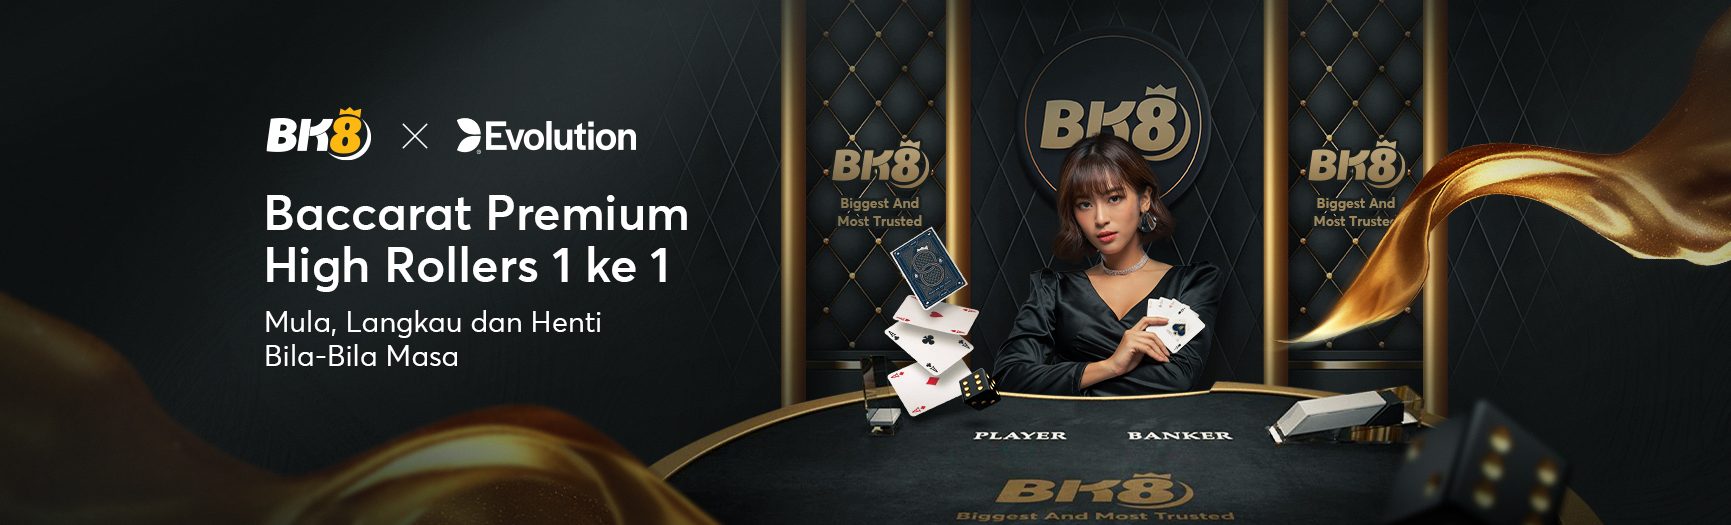 BK8-Evolution-Gaming-Baccarat-Premium